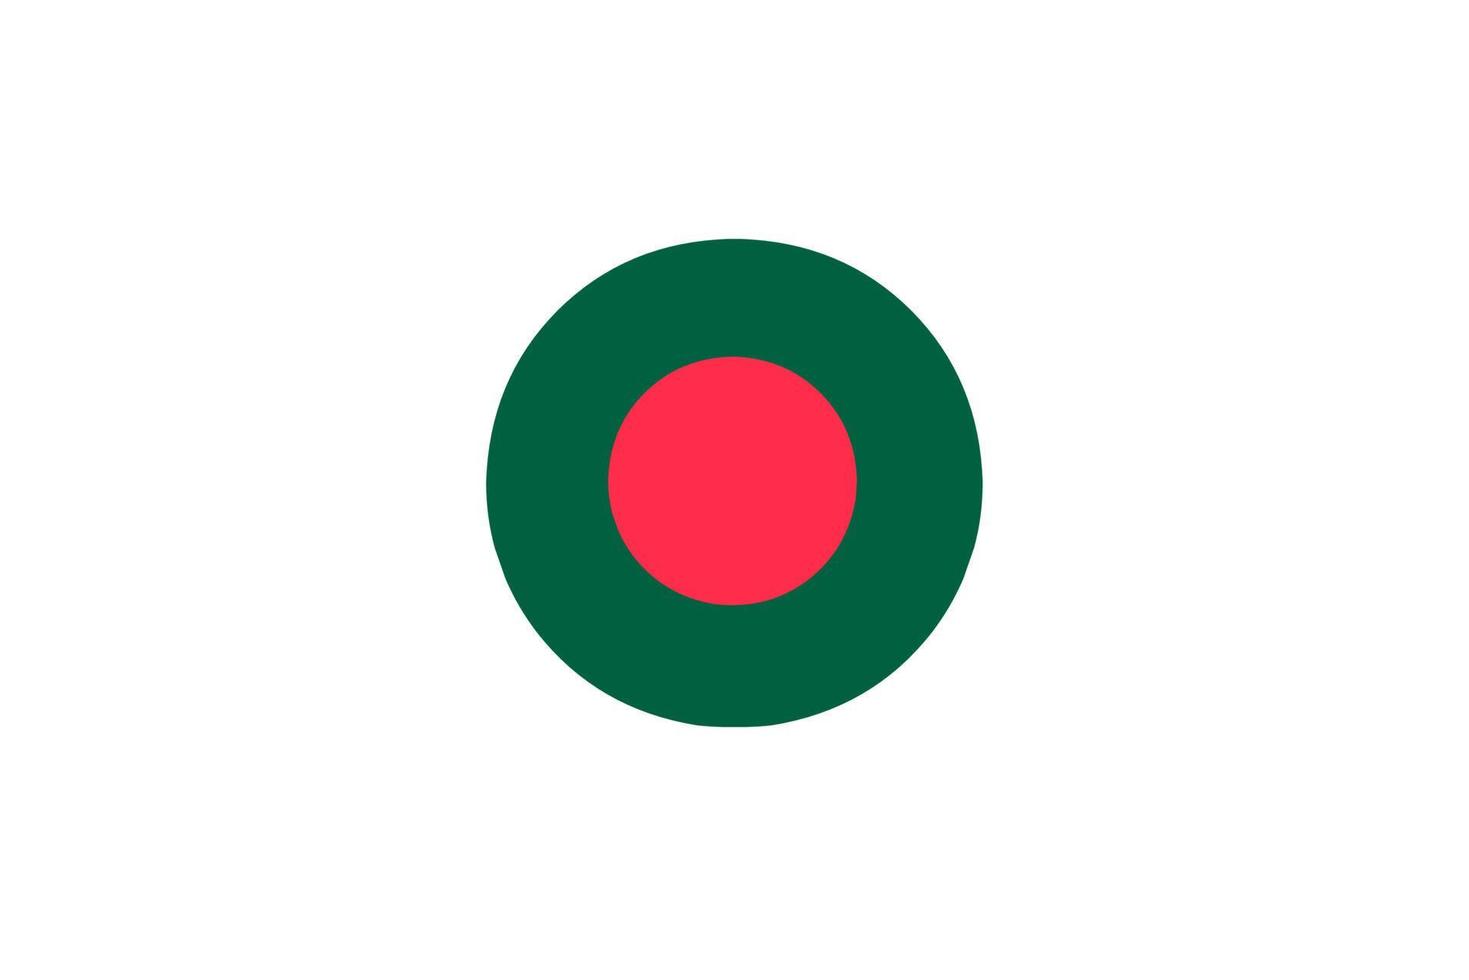 Bangladesh flag design illustration, icon flag design with elegant concept vector